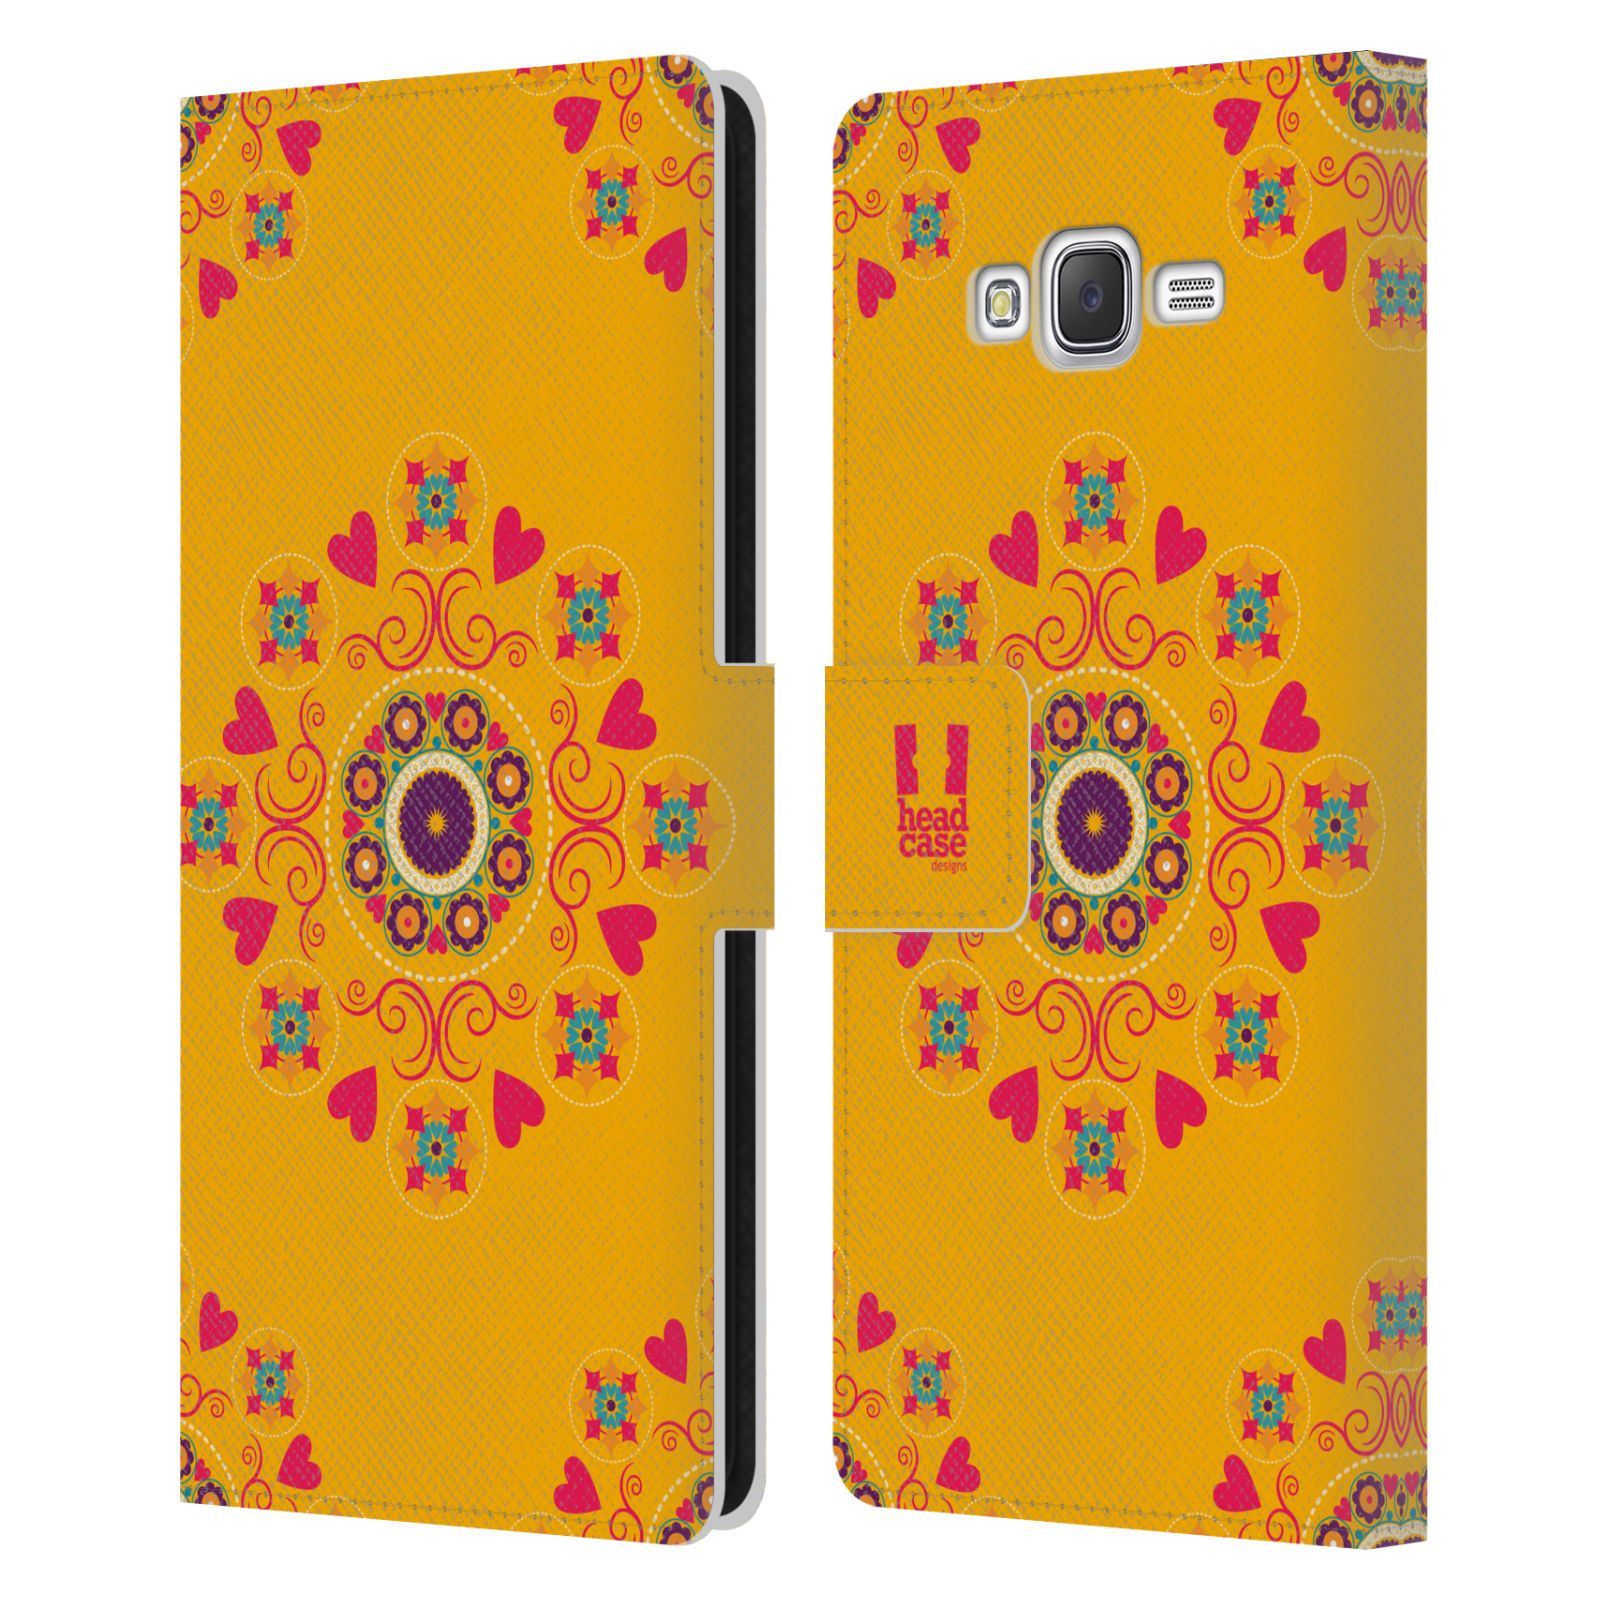 HEAD CASE Flipové pouzdro pro mobil Samsung Galaxy J7, J700 Slovanský vzor květiny a srdíčka žlutá